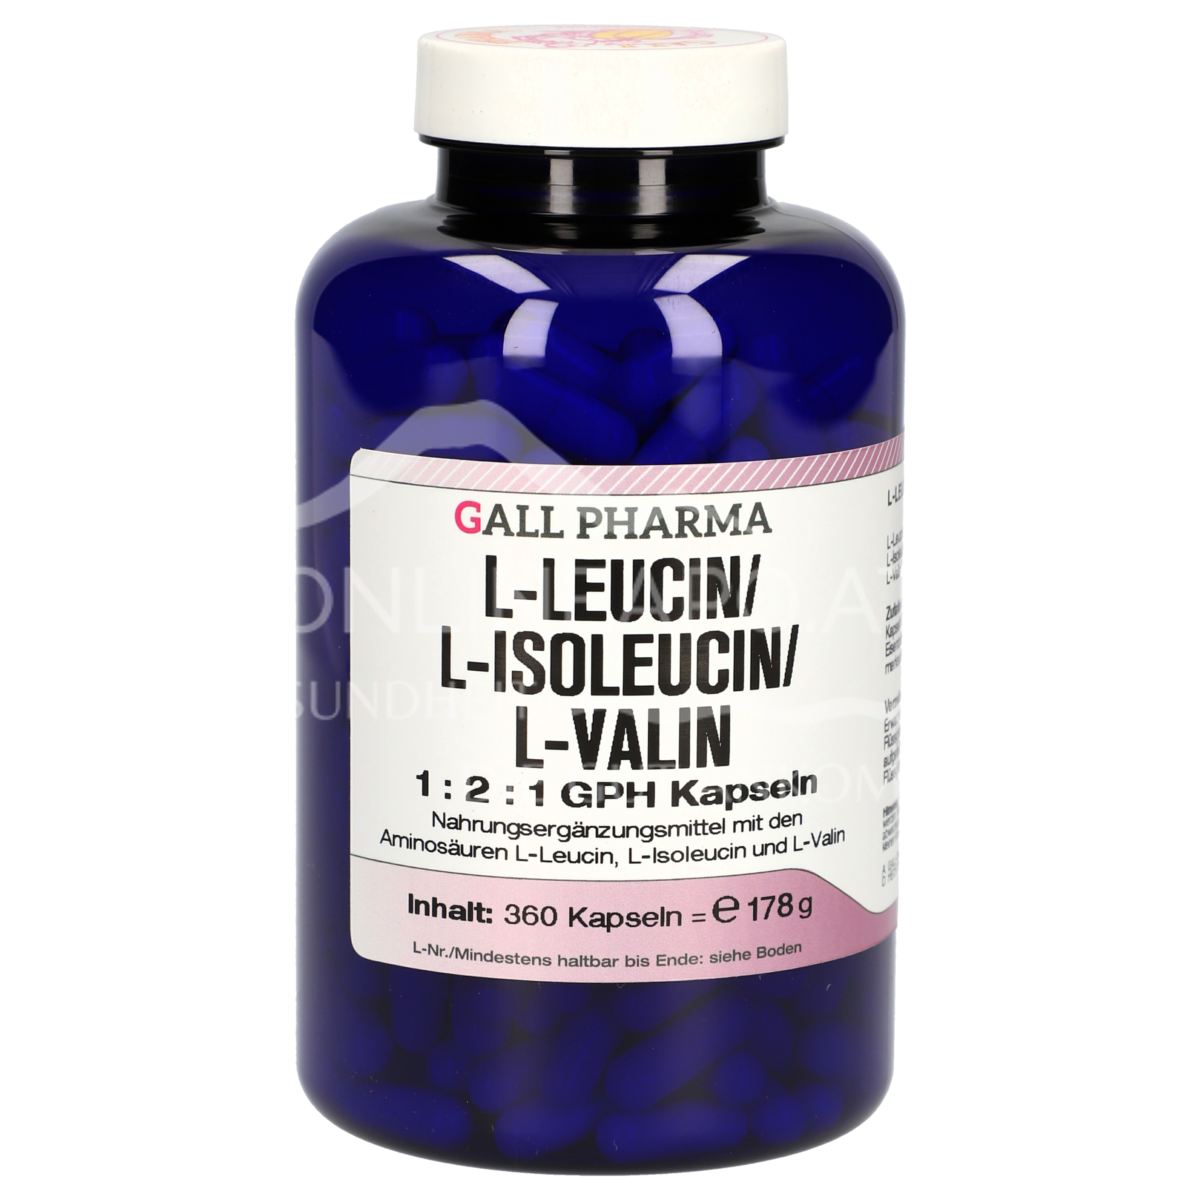 Gall Pharma L-Leucin/L-Isoleucin/L-Valin 1:2:1 Kapseln